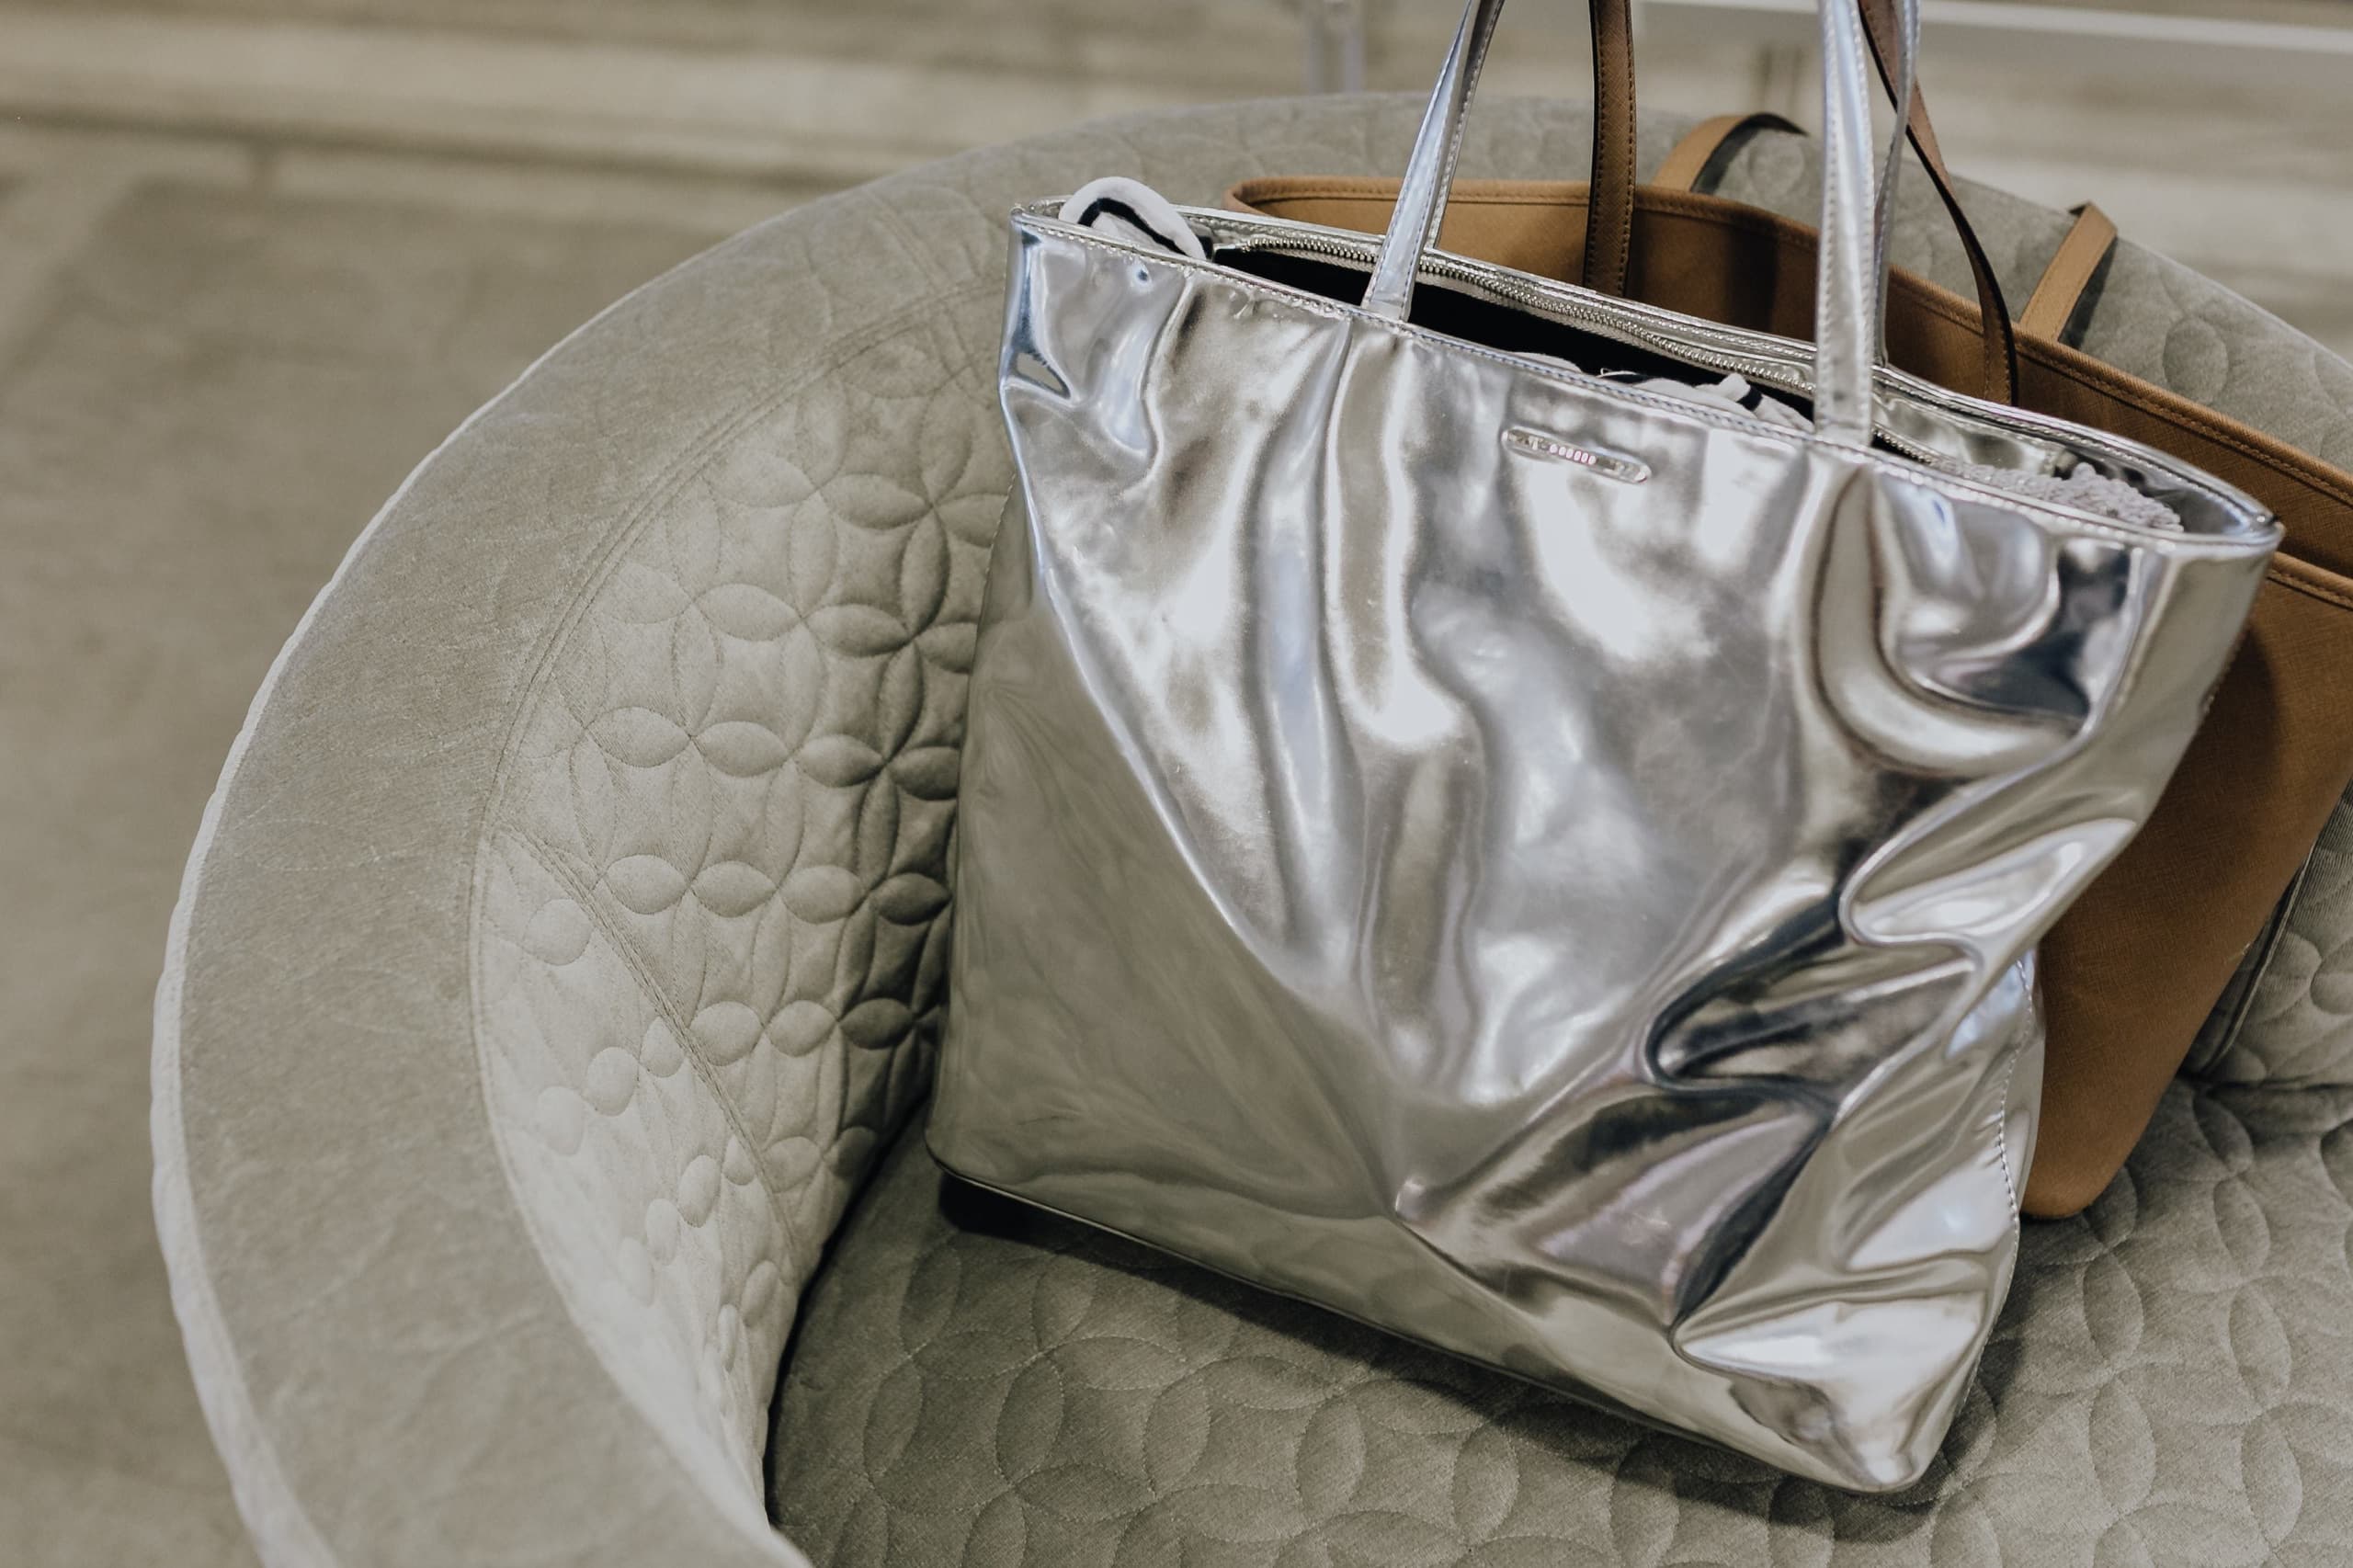 kaboompics_womens-handbags-on-the-chance-tub-chair-saba-italia-7327.jpg